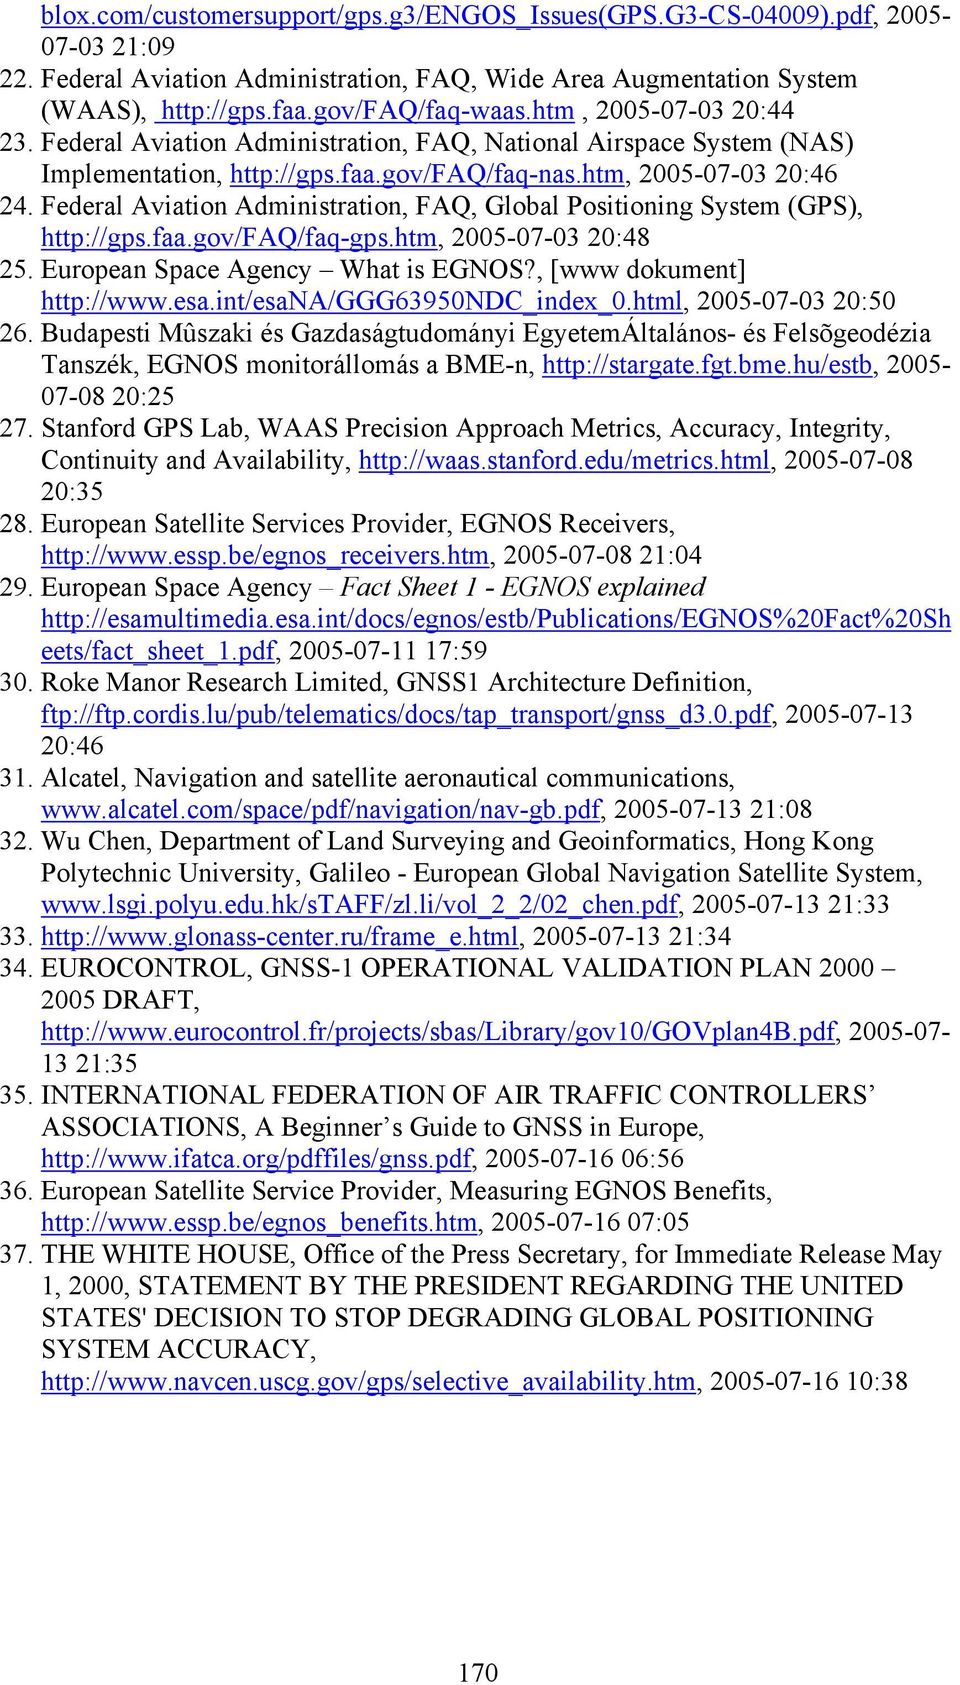 Federal Aviation Administration, FAQ, Global Positioning System (GPS), http://gps.faa.gov/faq/faq-gps.htm, 2005-07-03 20:48 25. European Space Agency What is EGNOS?, [www dokument] http://www.esa.